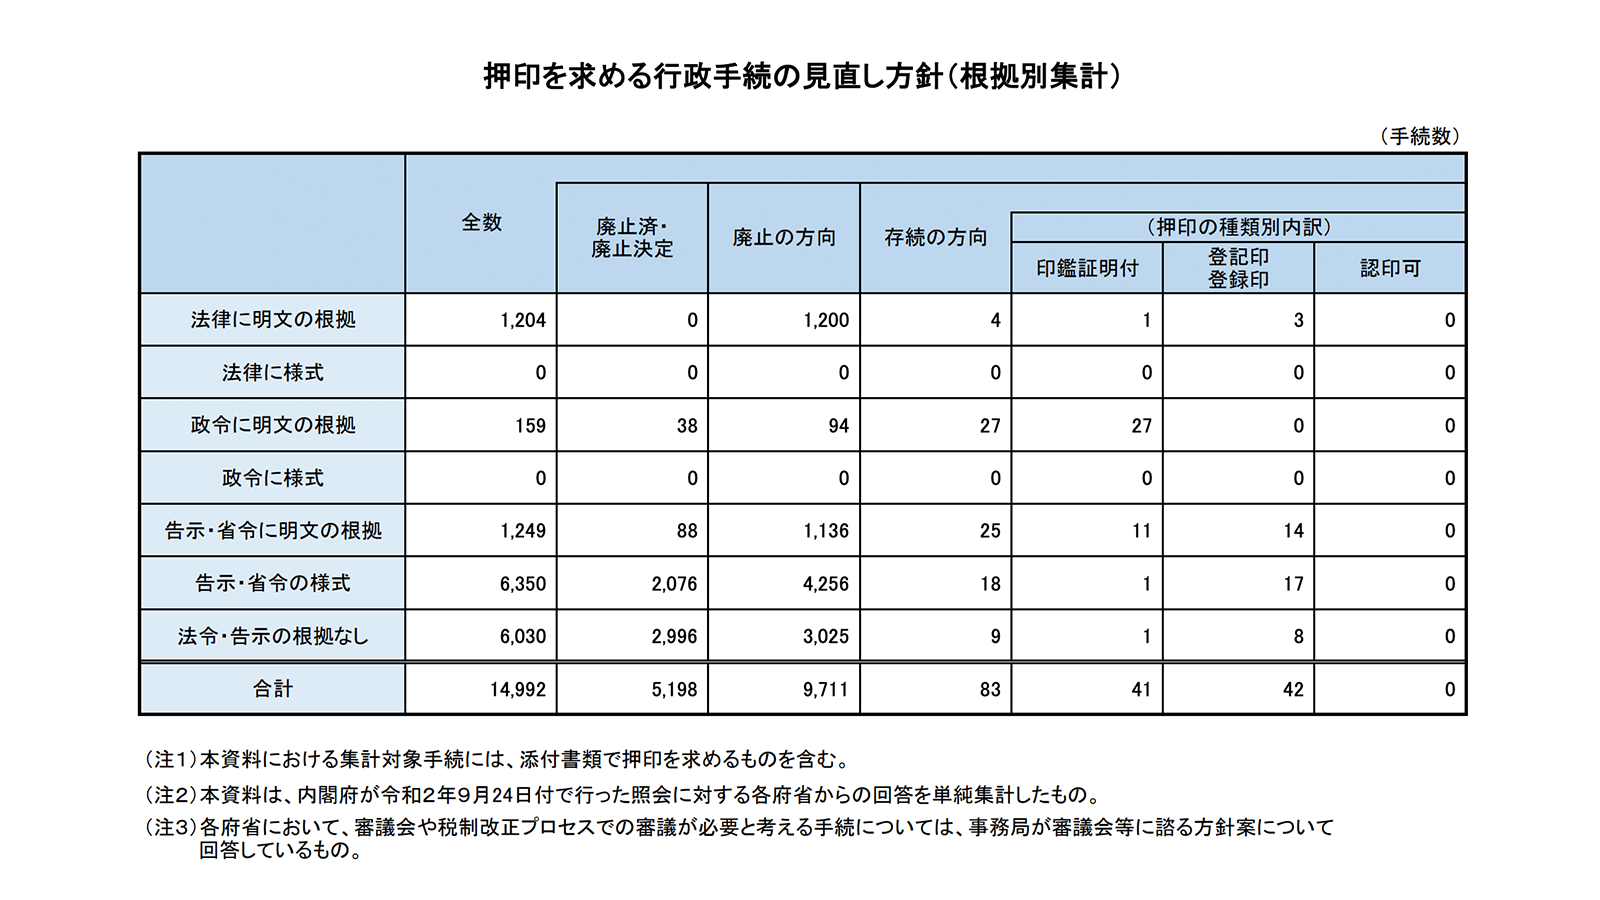 https://www8.cao.go.jp/kisei-kaikaku/kisei/imprint/document/201113document02.pdf 2021年5月6日最終アクセス